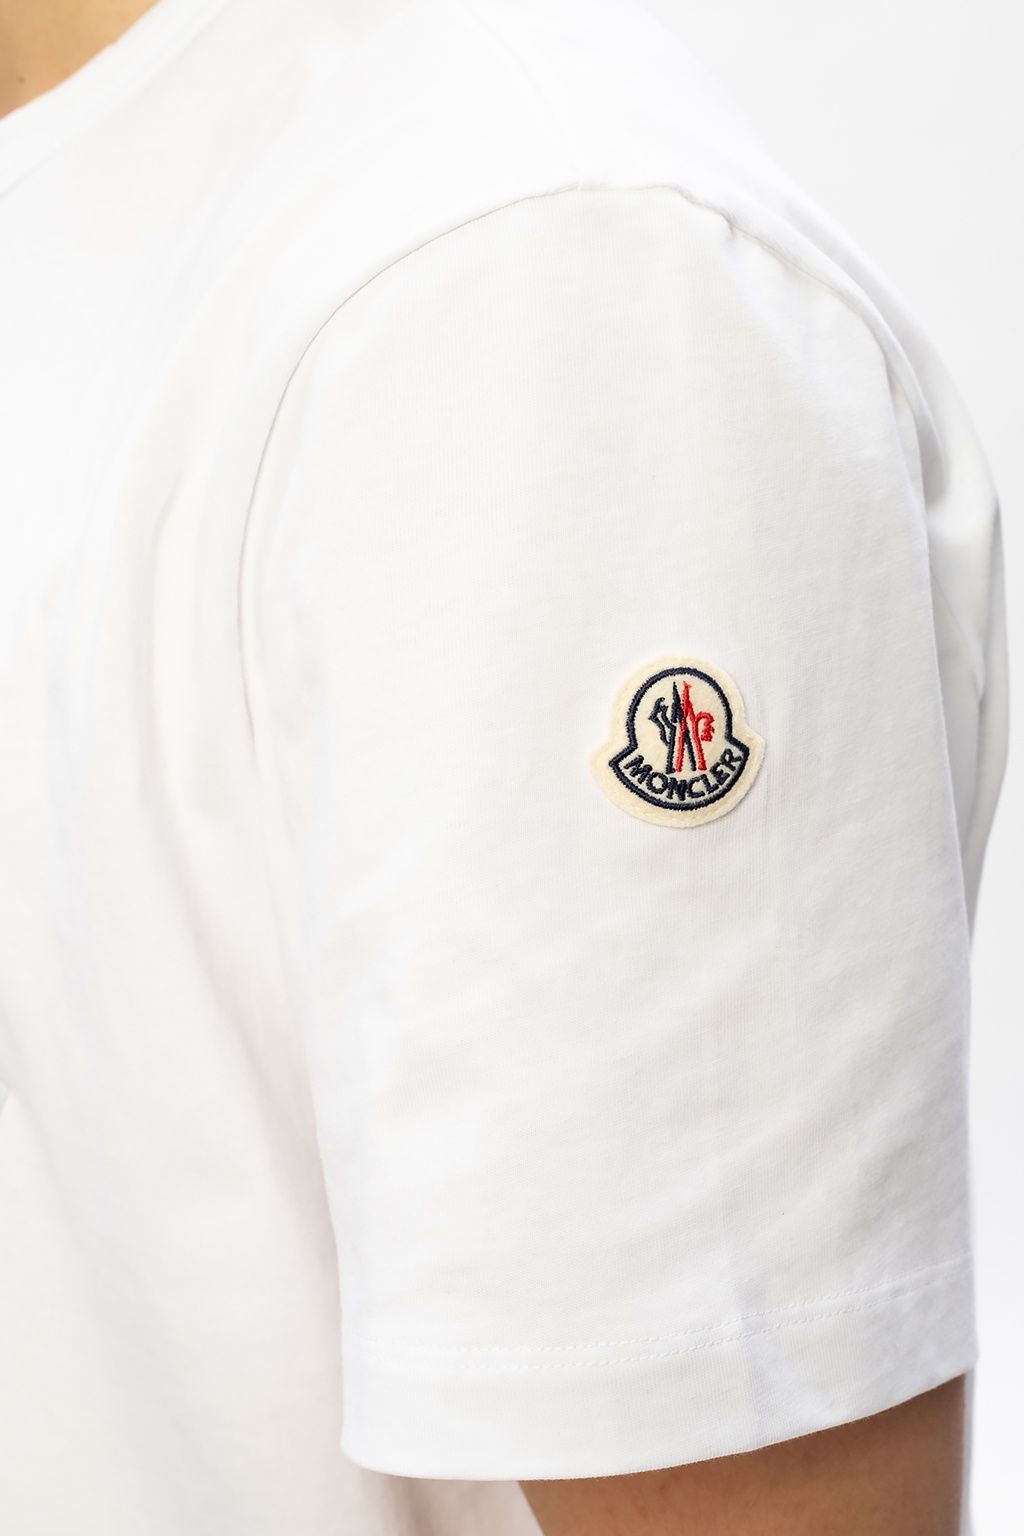 Moncler T-shirt with logo | Men's Clothing | IicfShops